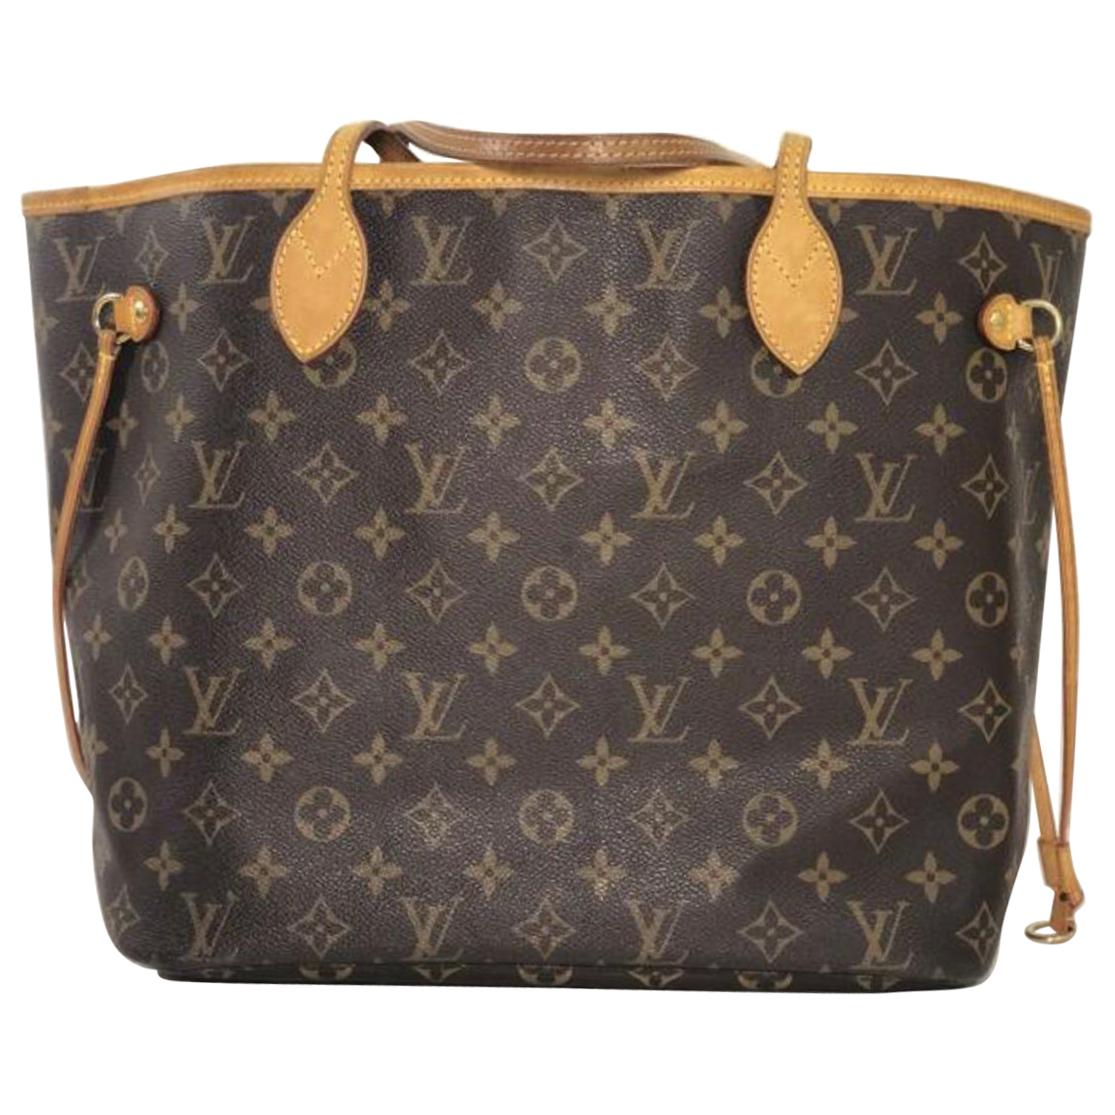  Louis Vuitton Monogram Neverfull MM Tote Shoulder Handbag For Sale